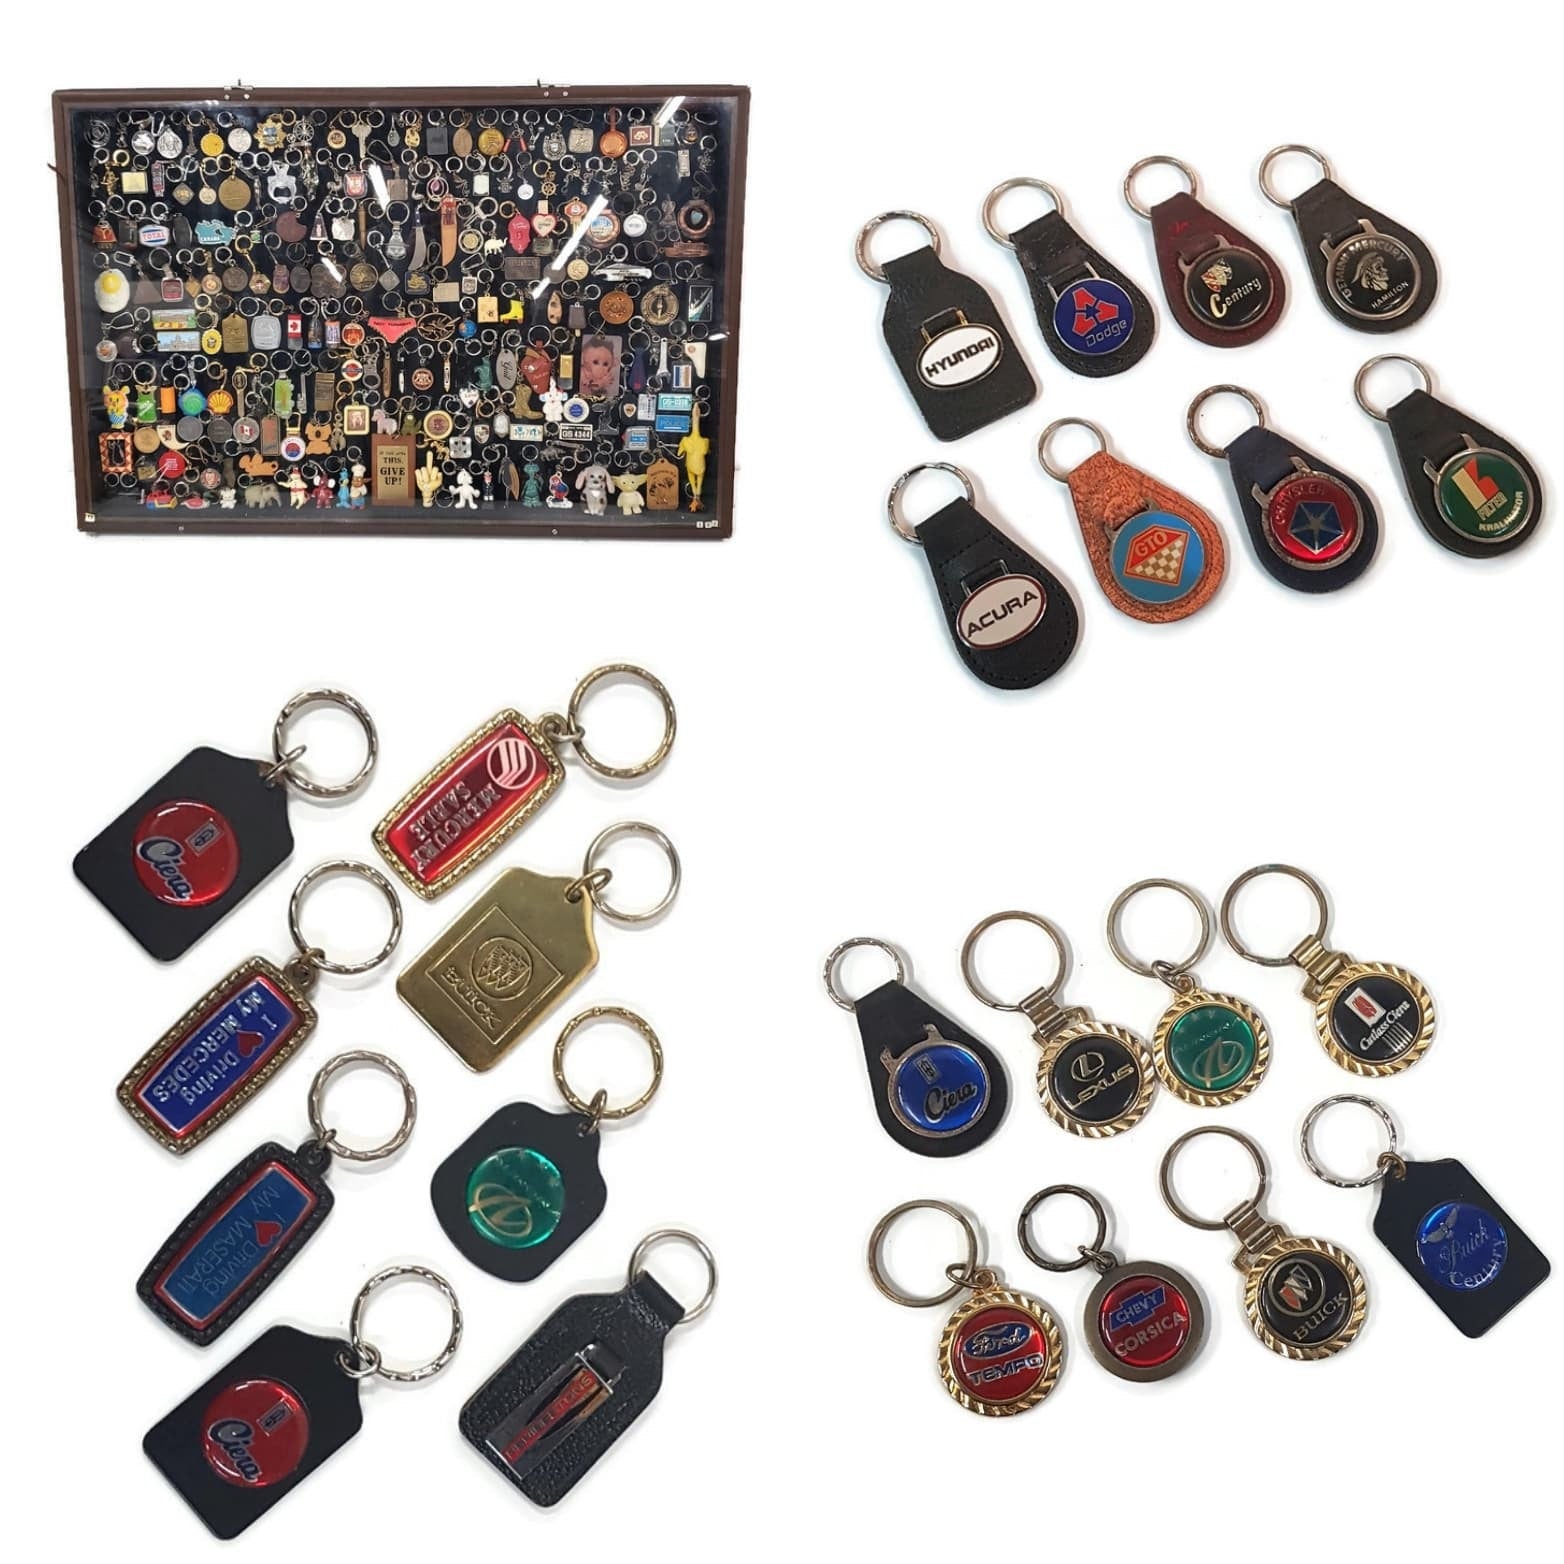 acura key chain keychain key fob keytag vintage automotove keychain gift collectible